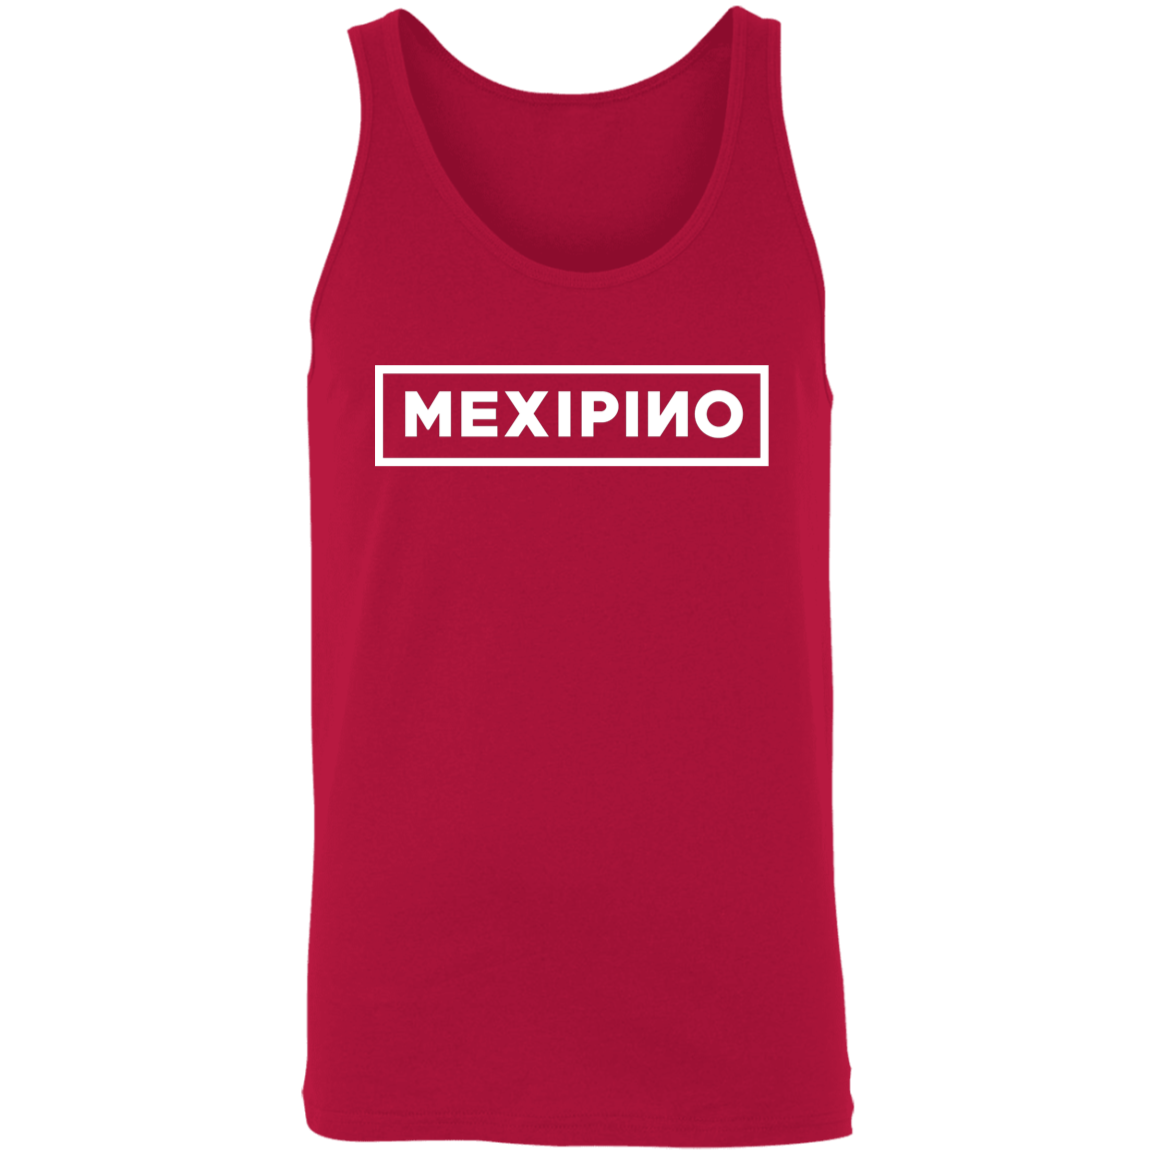 Mexipino BP Unisex Cotton Tank Top